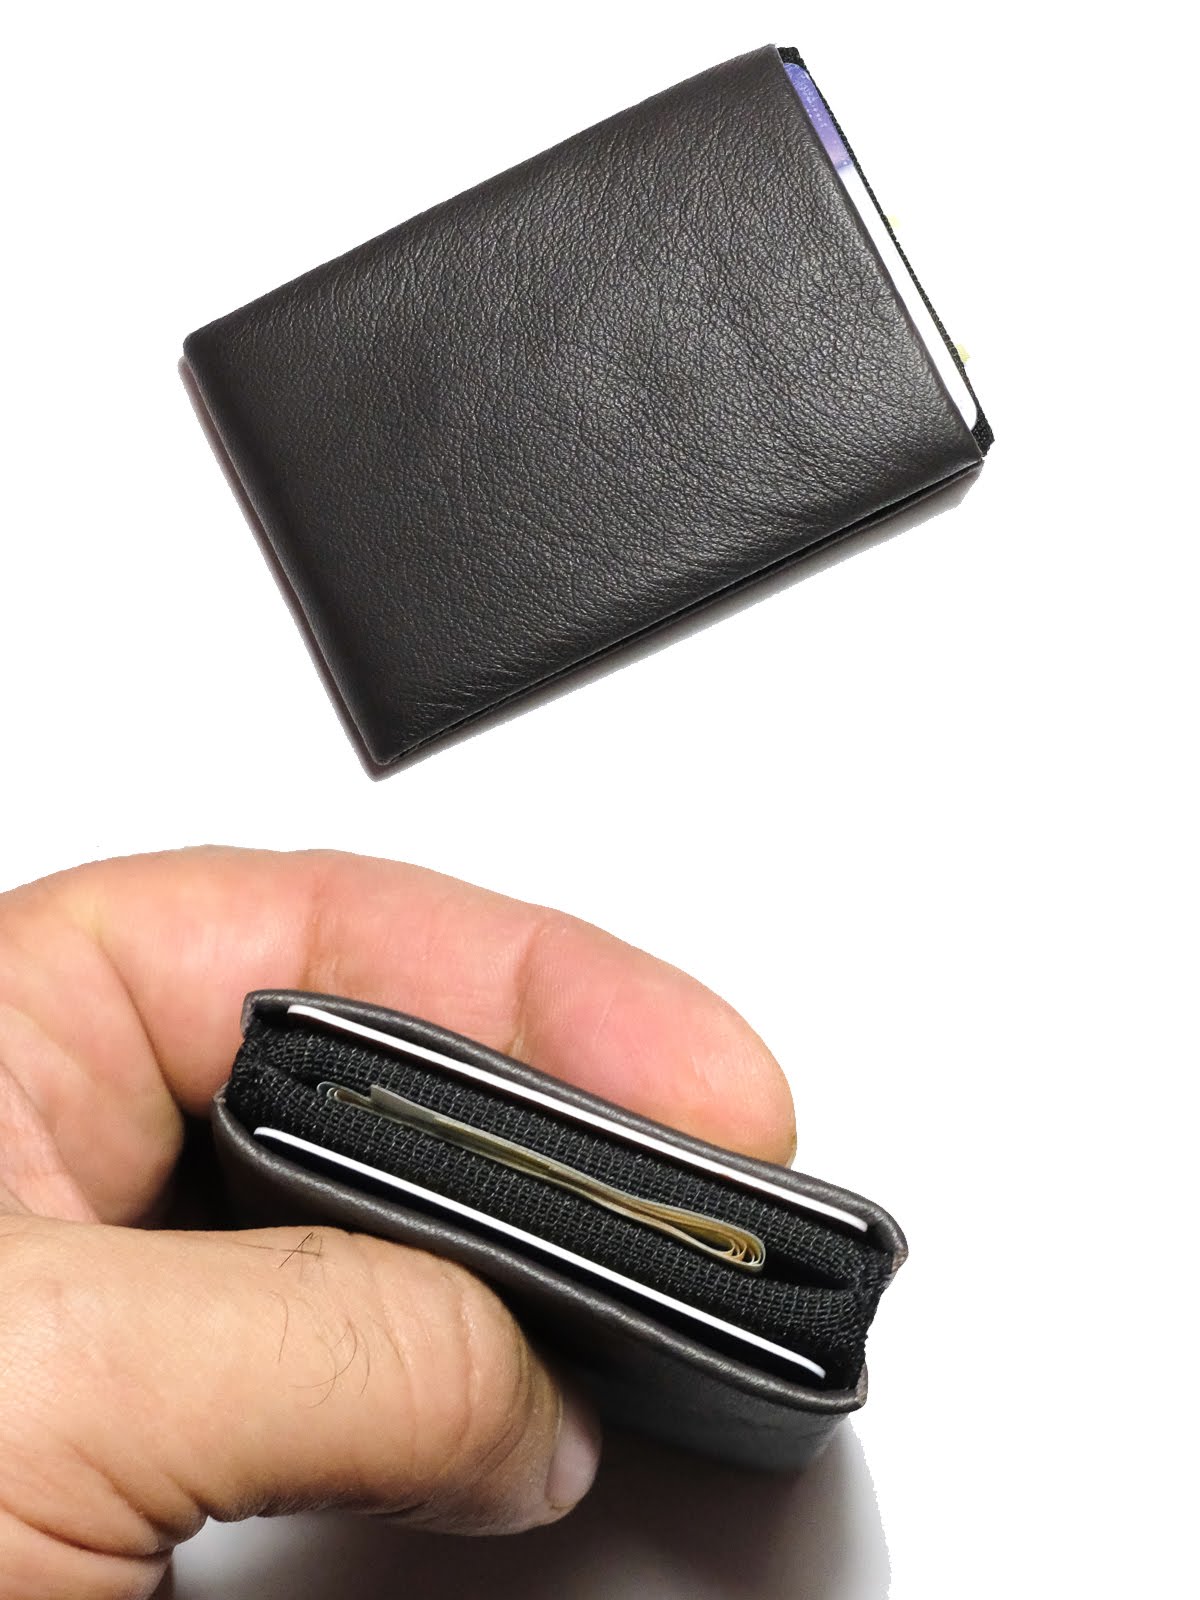 Are RFID Wallets Heavier?